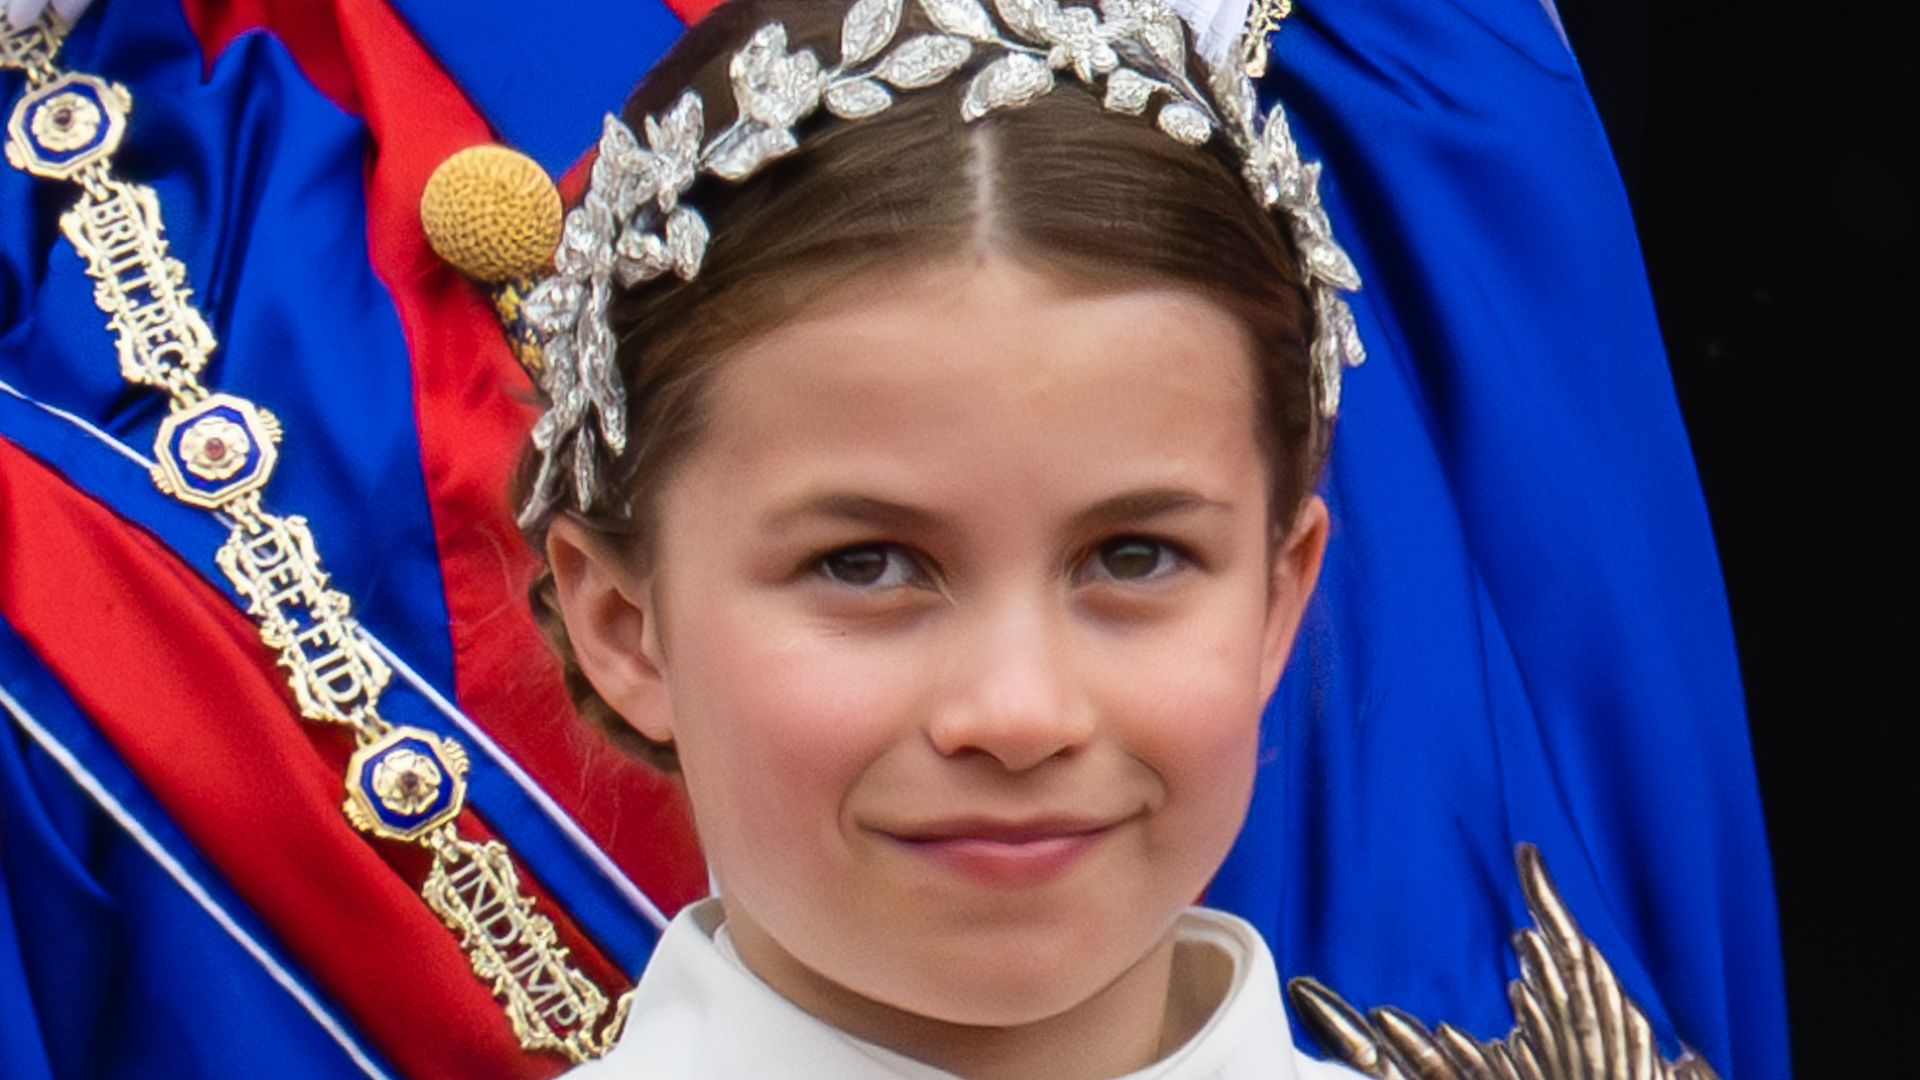 Princess Charlotte on the royal balcony